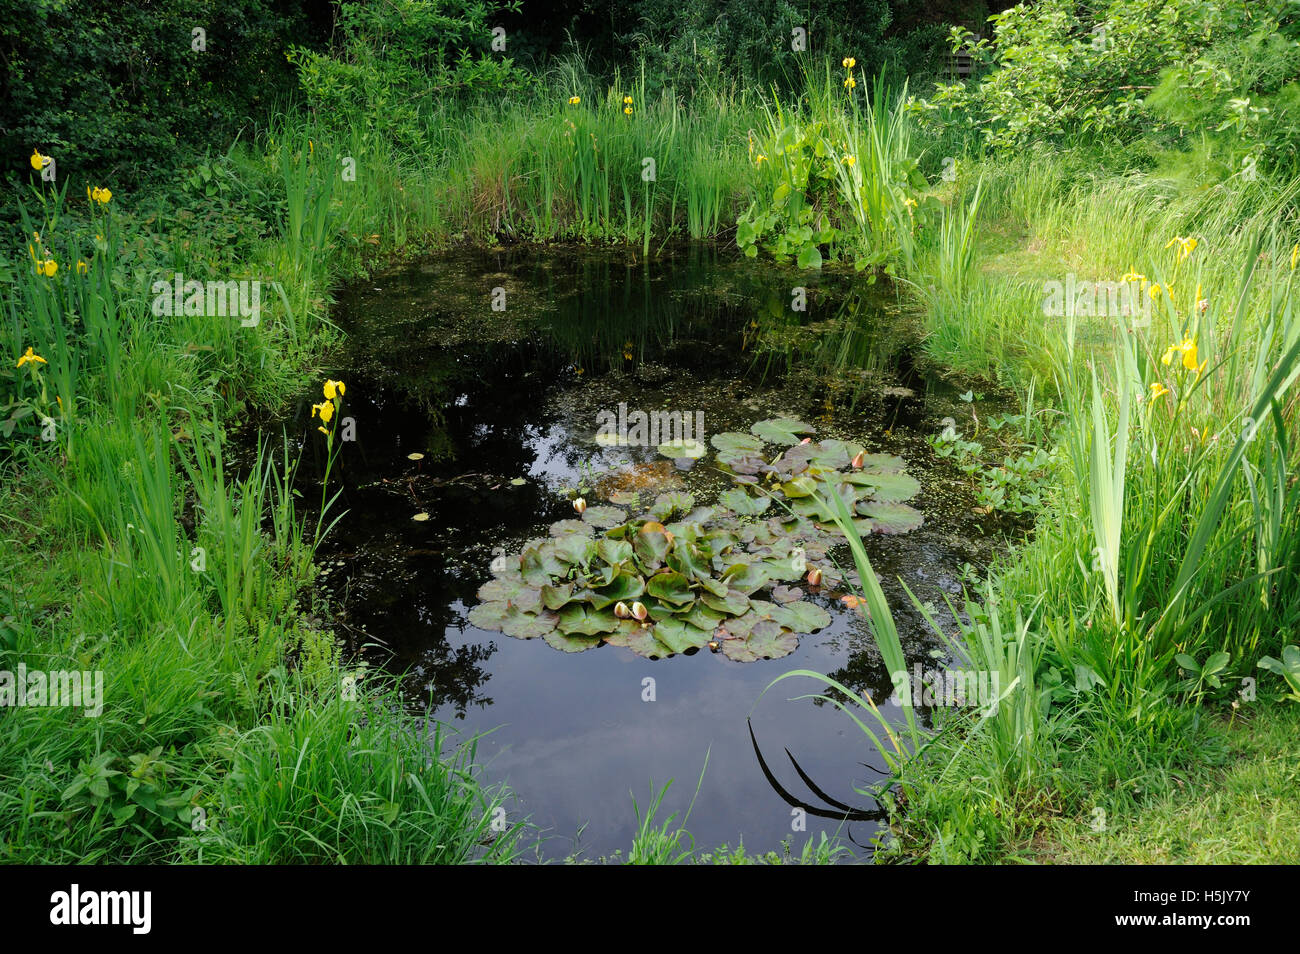 Garden Pond and surrounding vegetation in garden habitat Stock Photo